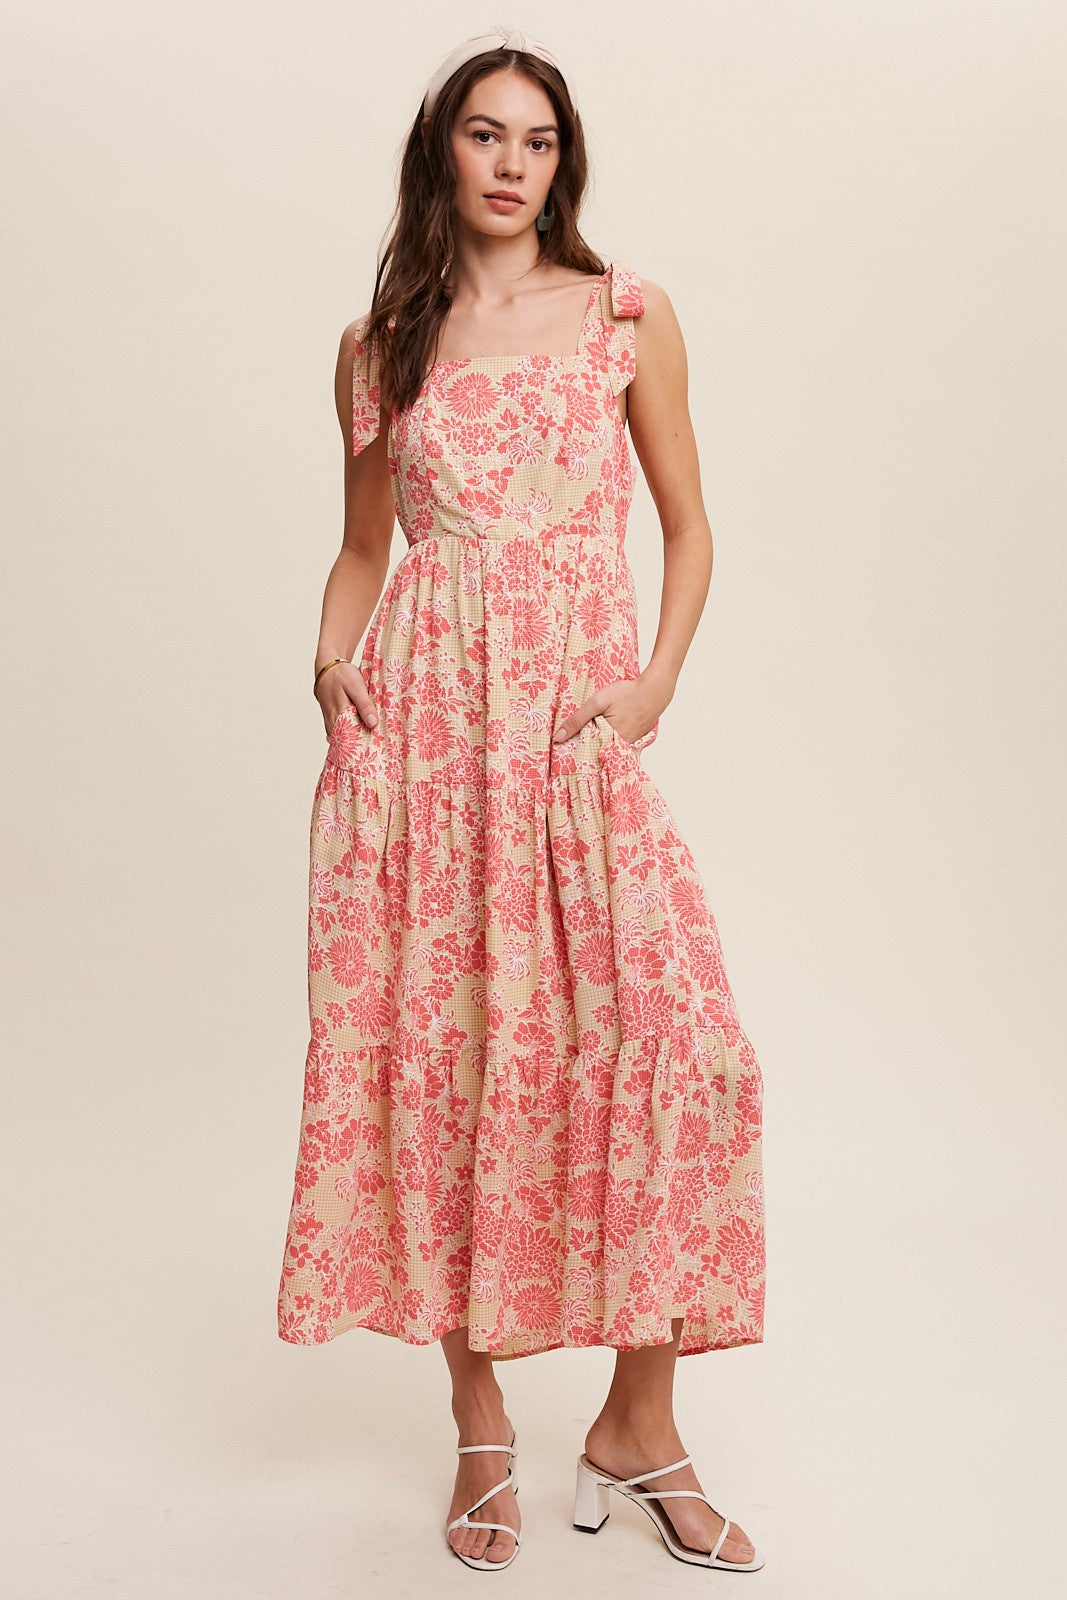 The Sadie Floral Maxi Dress